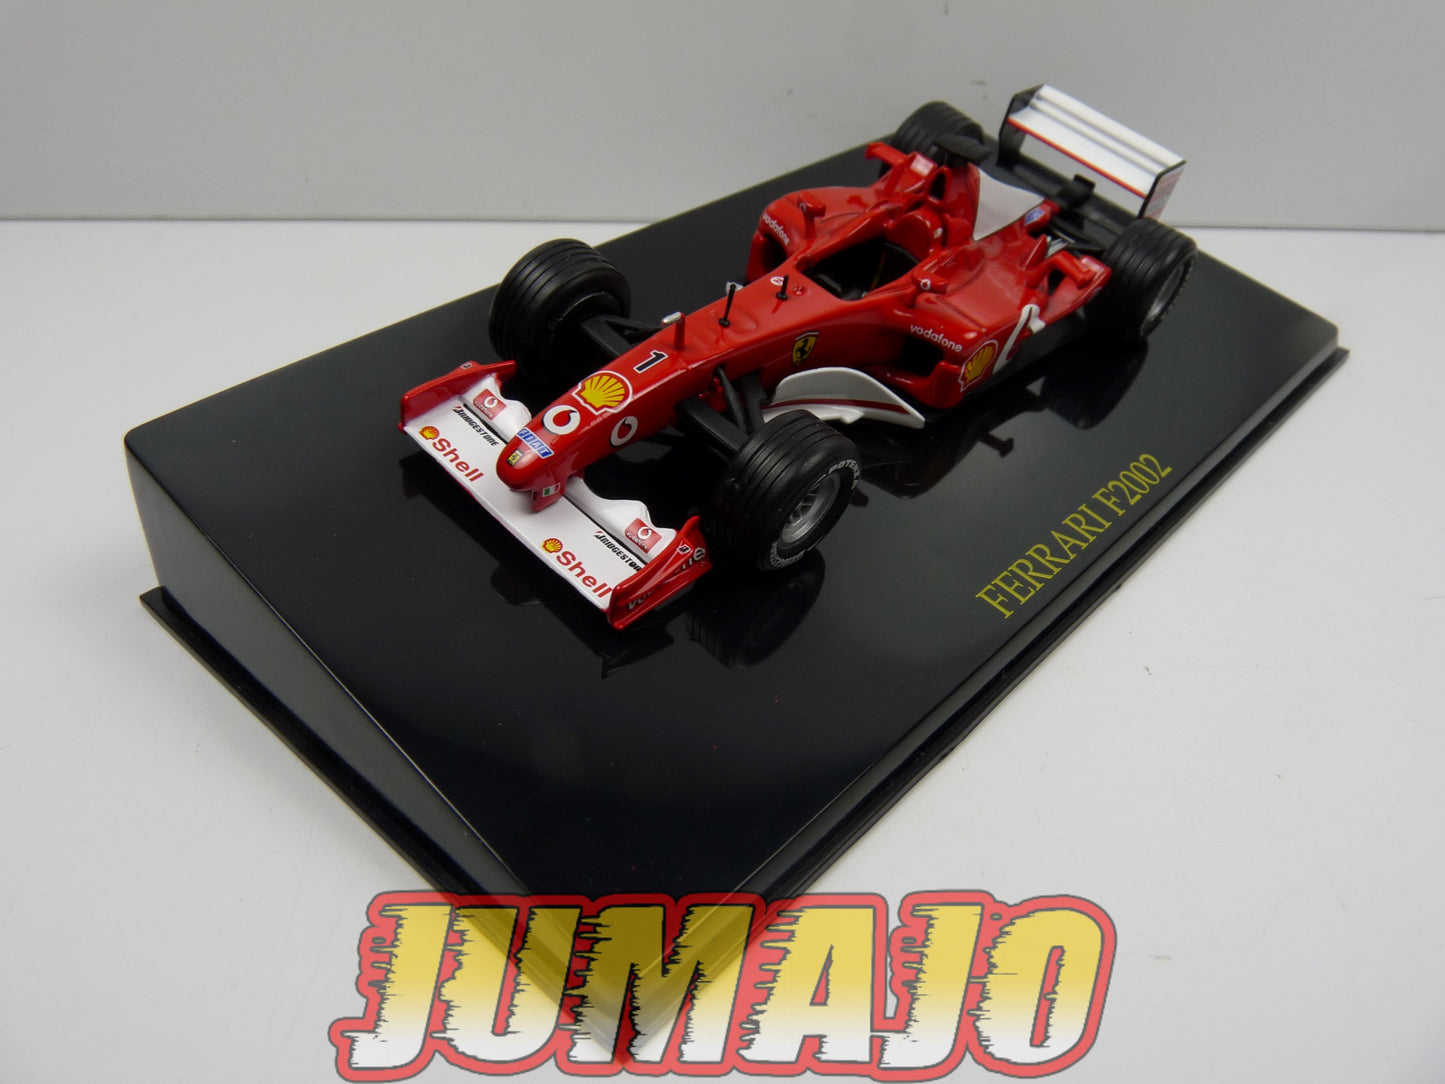 FER38 Altaya 1/43 F1 Formule 1 Ferrari F2002